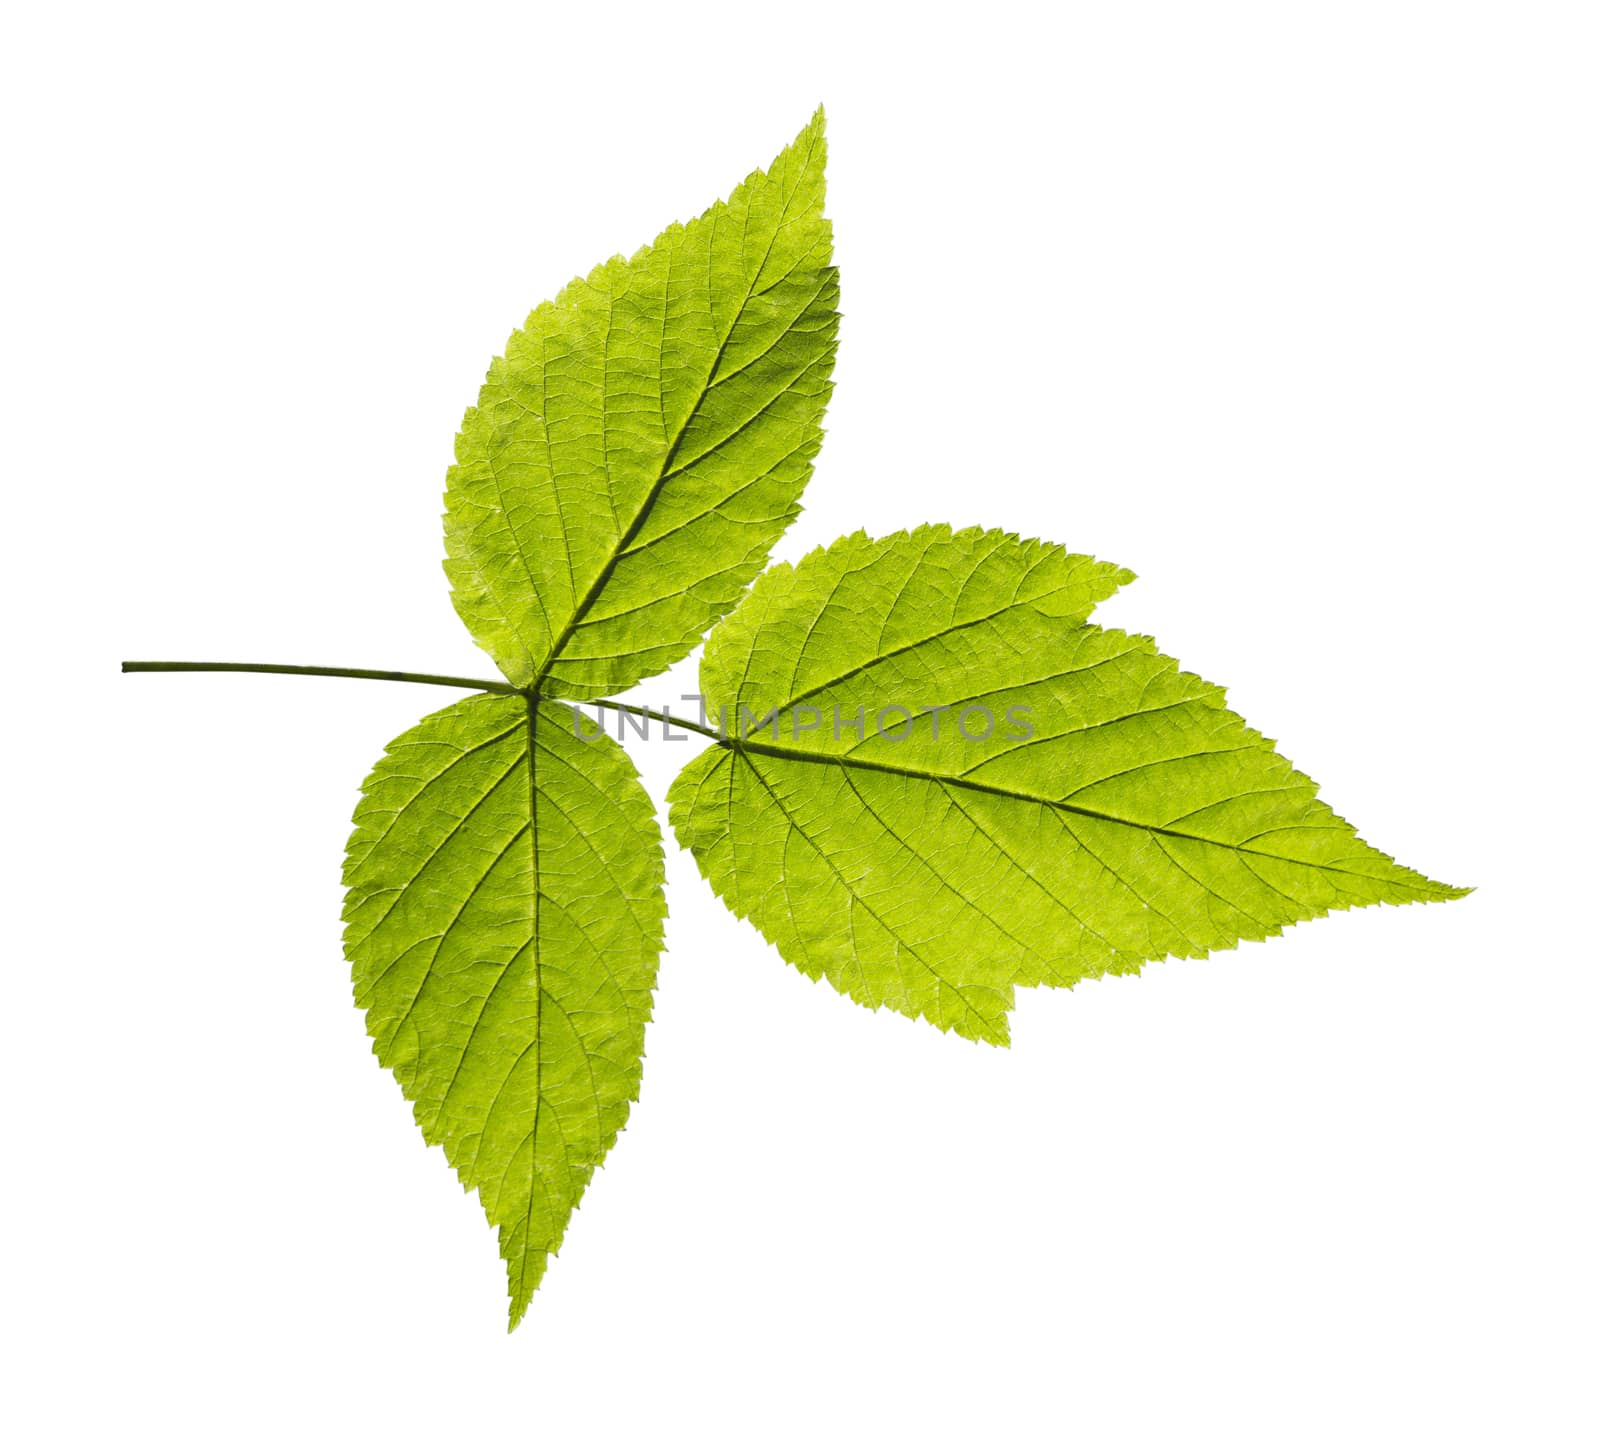 ash closeup leaf isolated on white background.